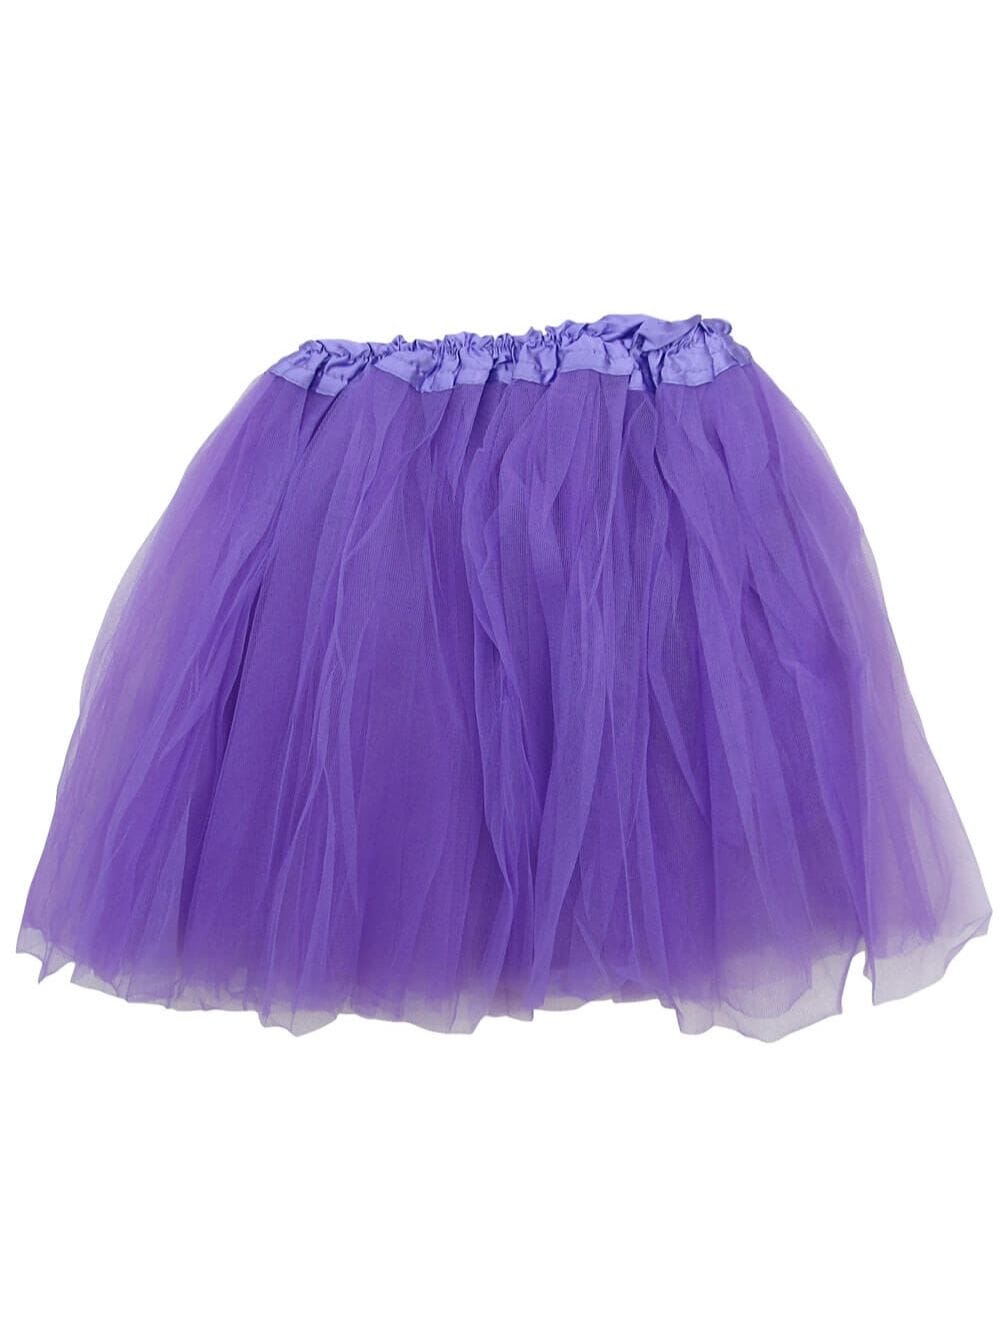 Purple Plus Size Adult Tutu Skirt - Women's Plus Size 3- Layer Basic Ballet Costume Dance Tutus - Sydney So Sweet